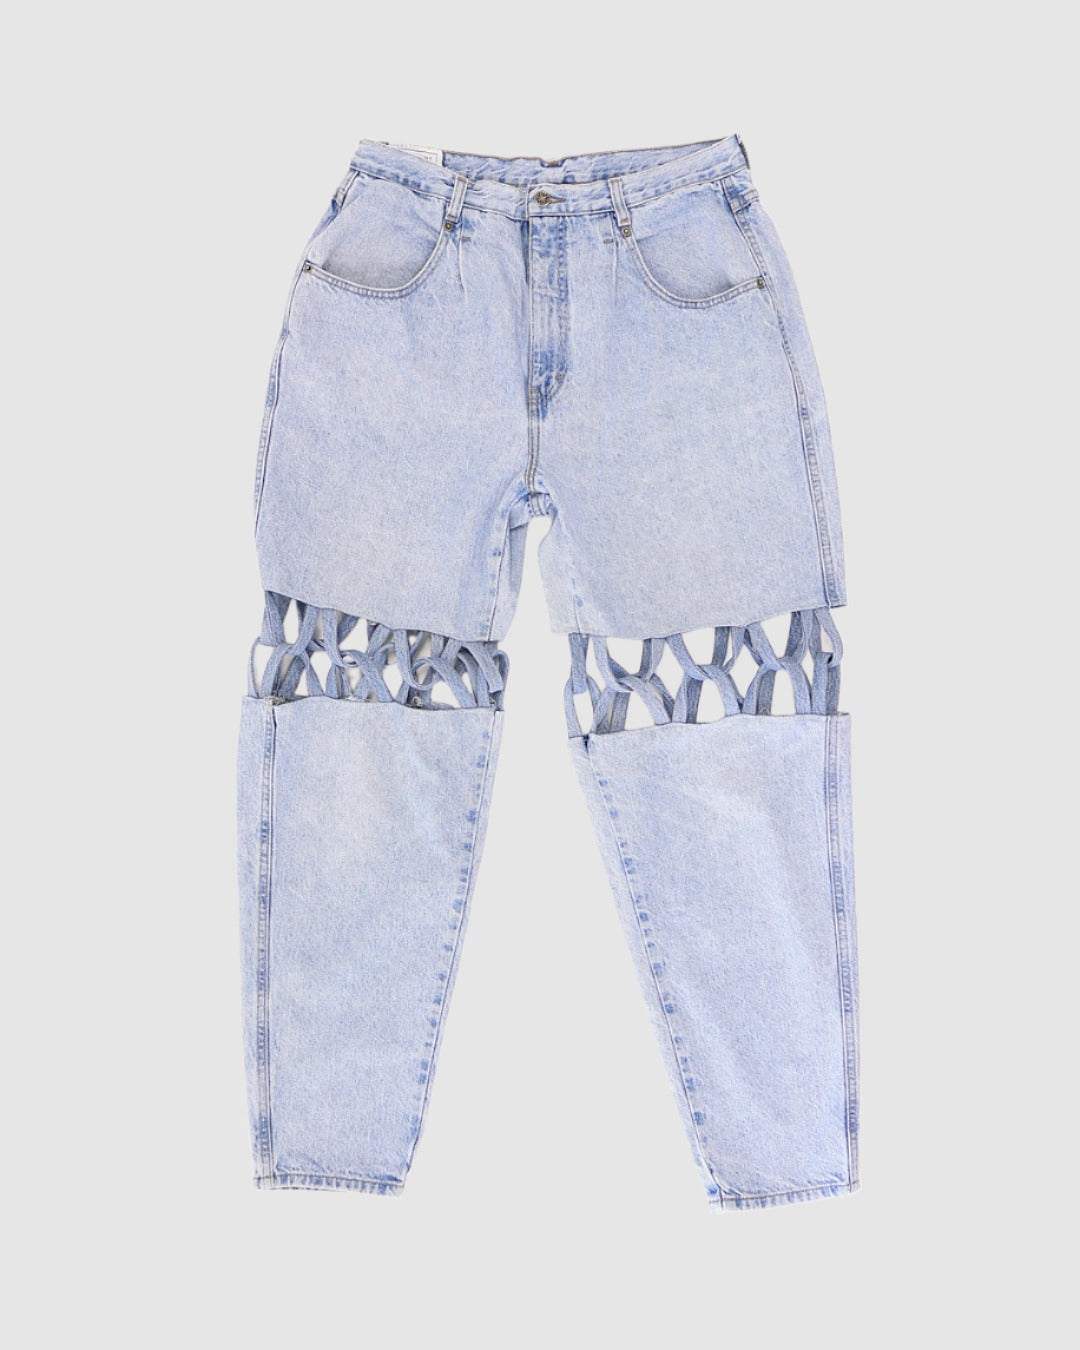 Criss Cross Jeans (size 14)